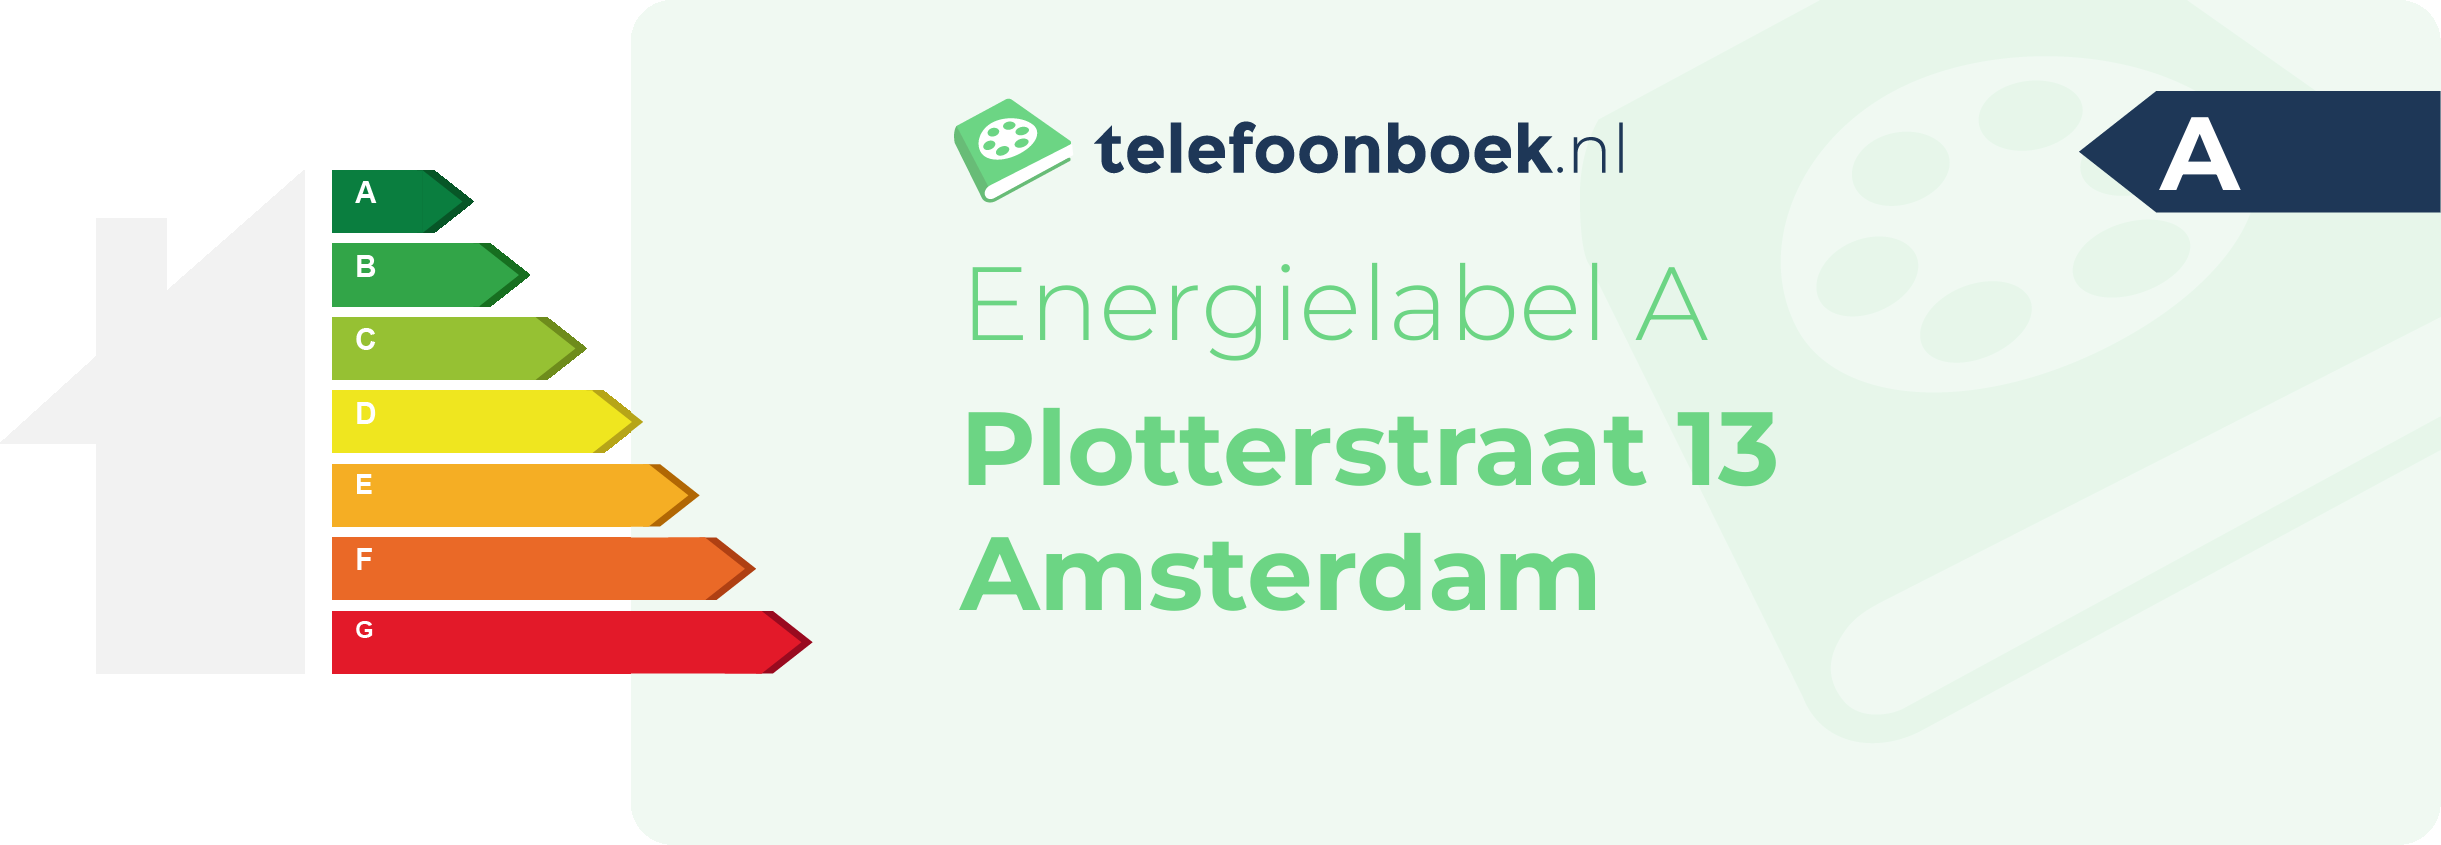 Energielabel Plotterstraat 13 Amsterdam